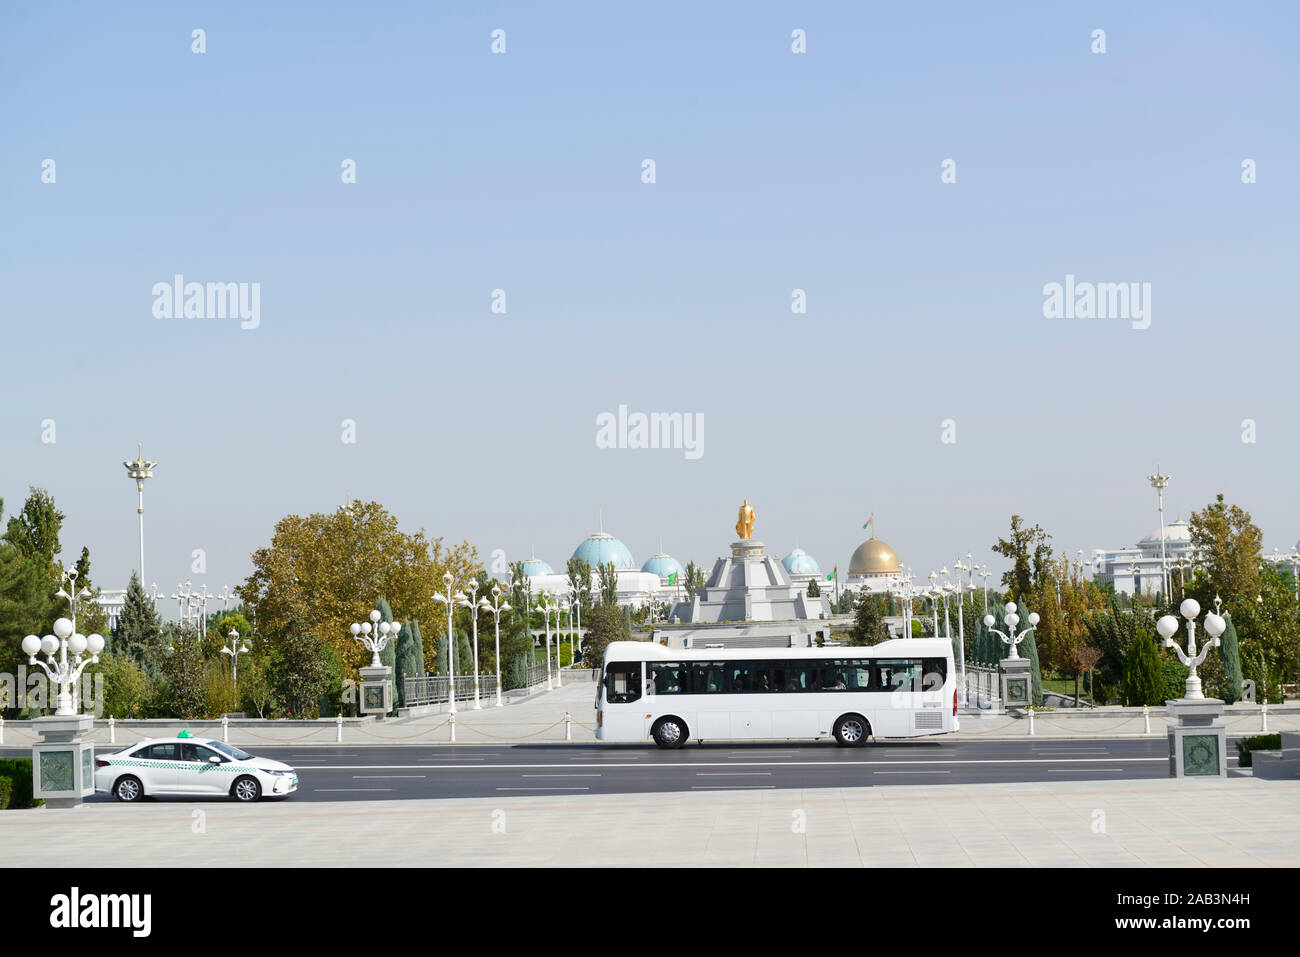 Ashgabat, capital of Turkmenistan. City of white buildings and white cars Stock Photo